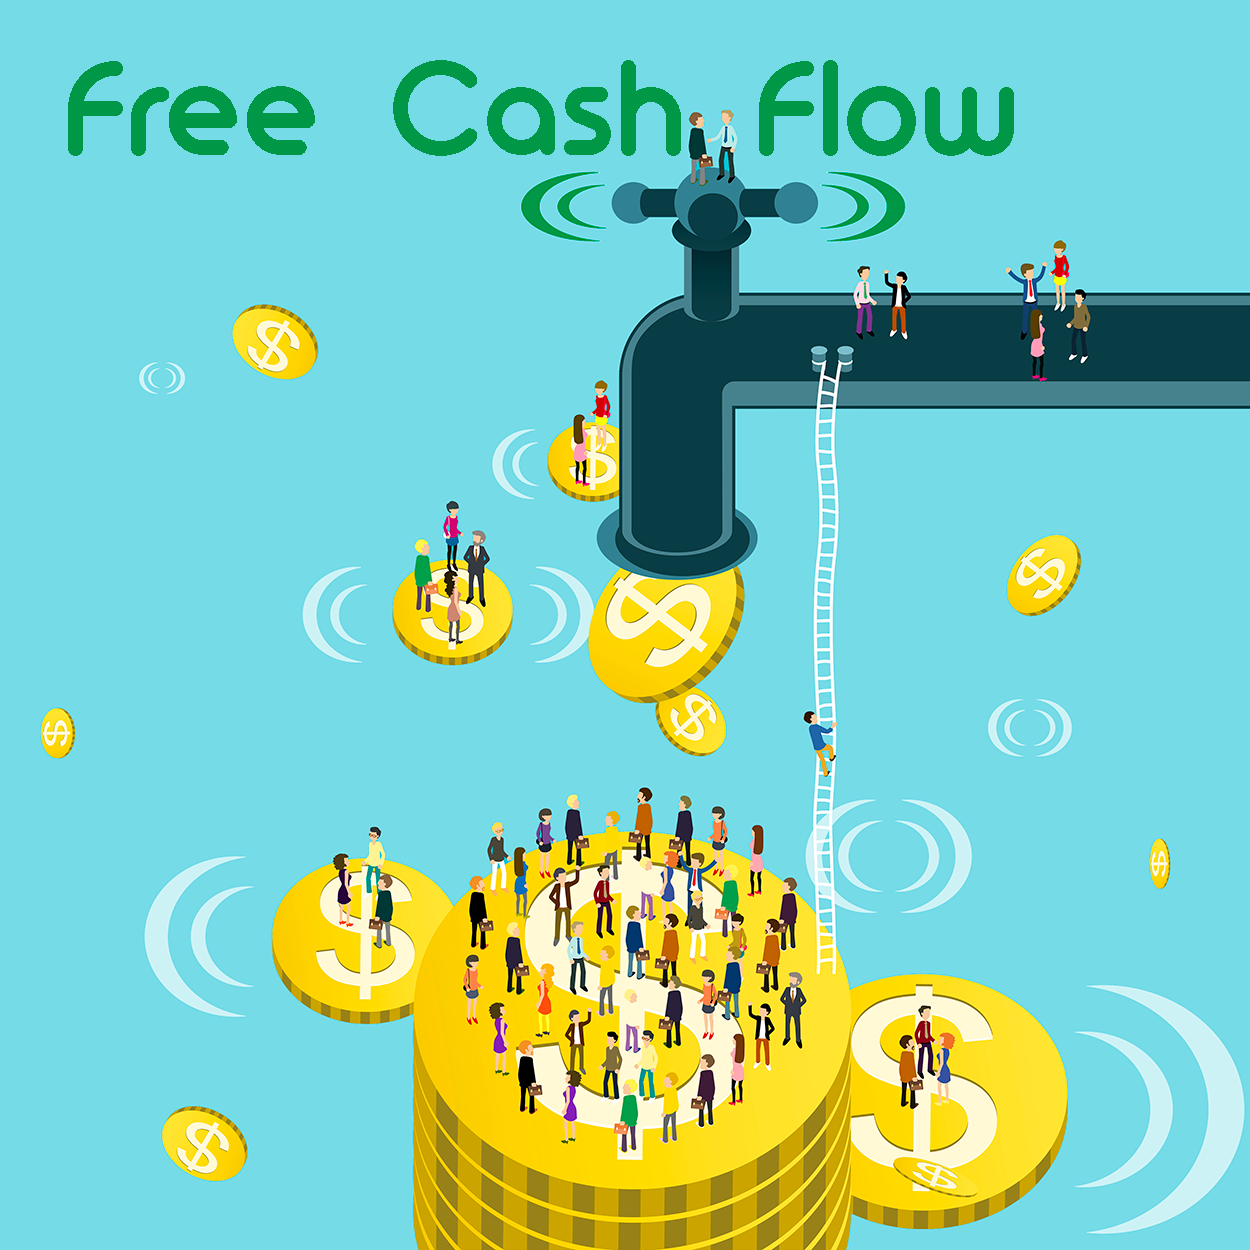 Free Cash Flow.